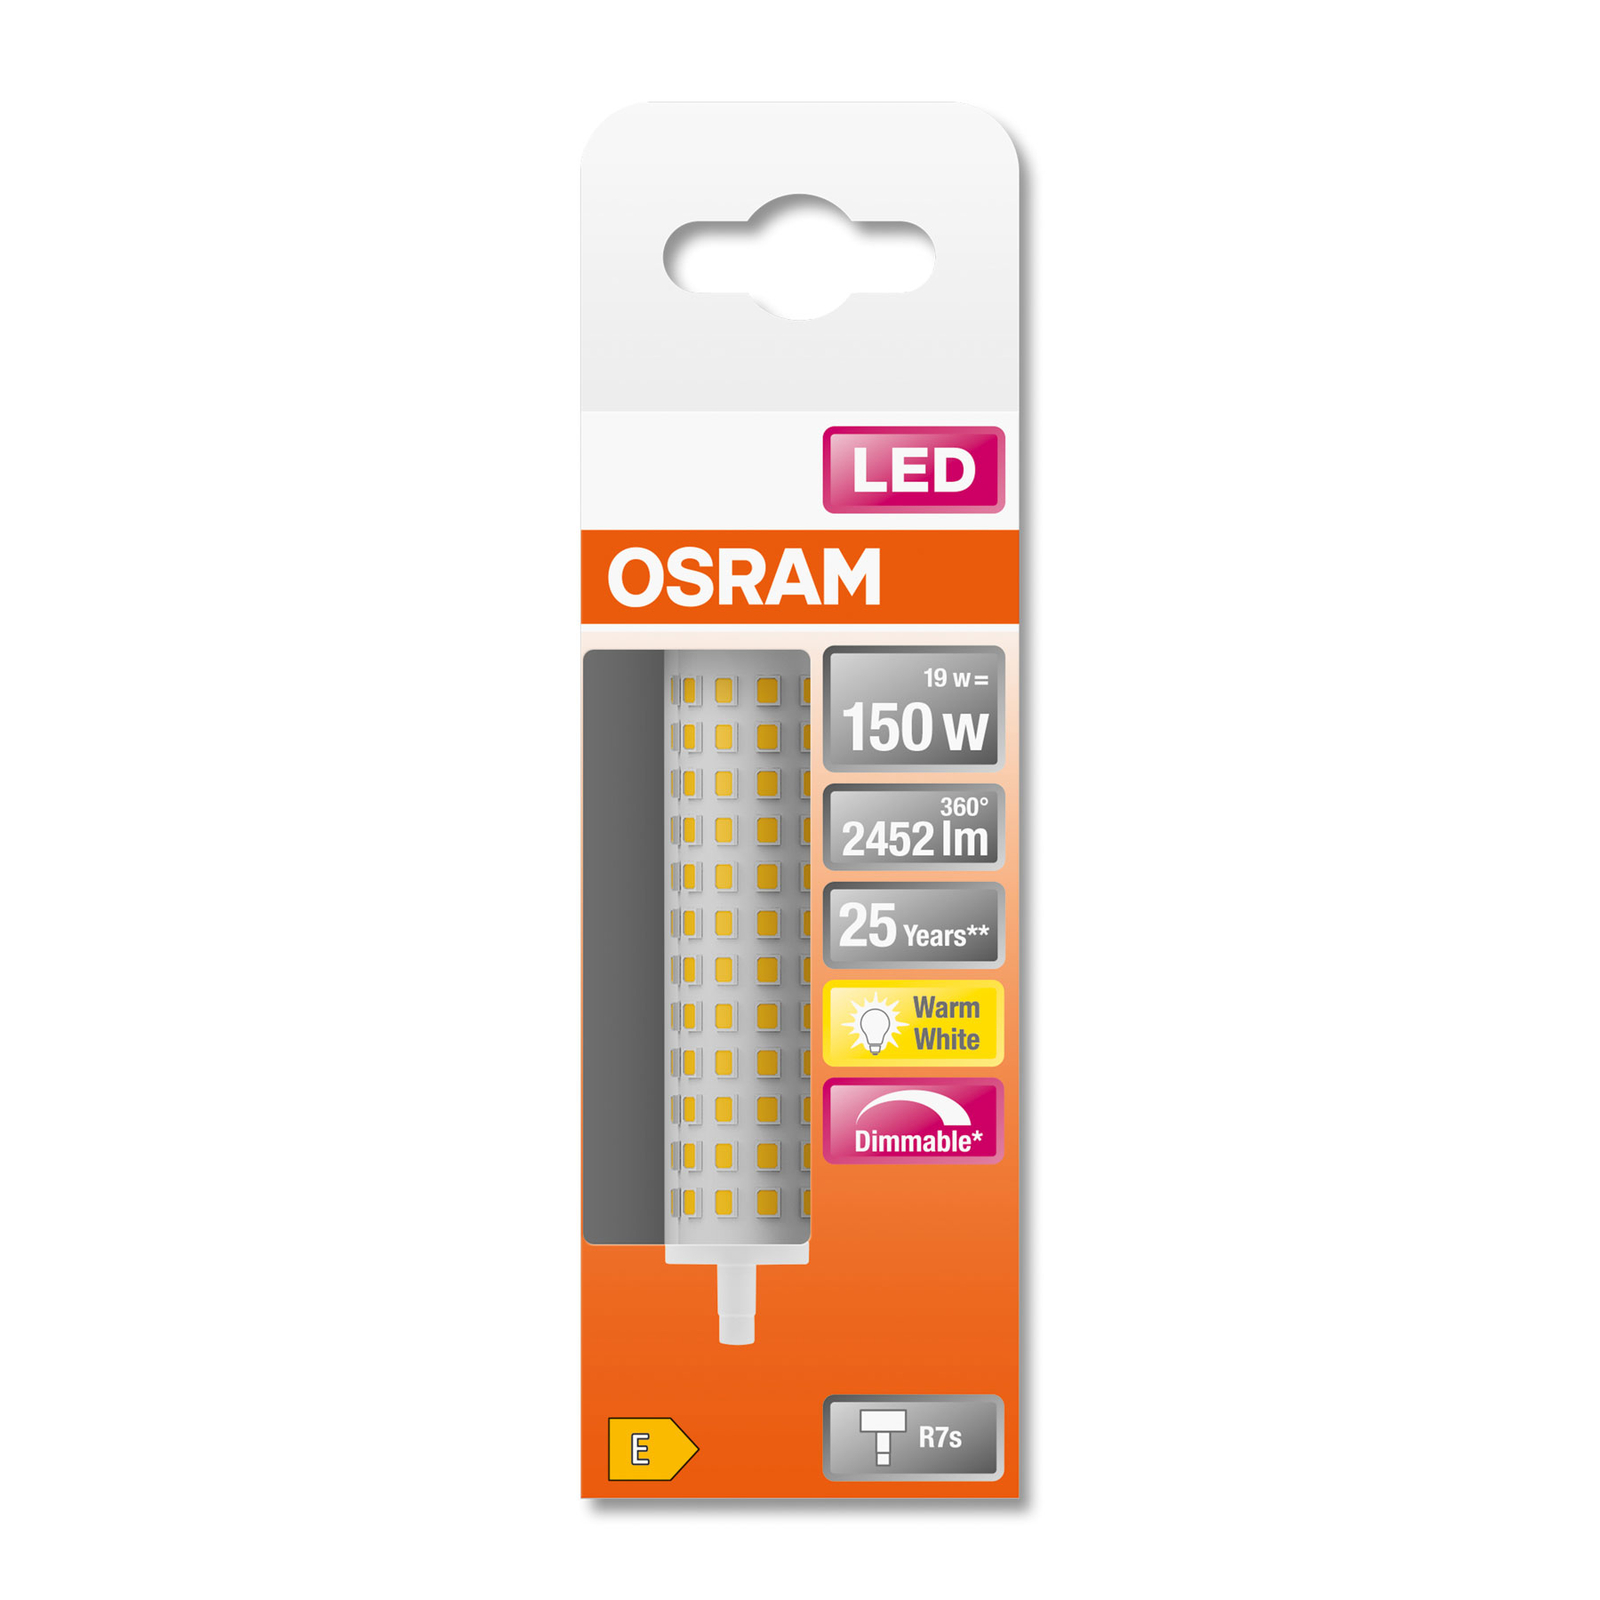 Motivatie chocola commando OSRAM LED lamp R7s 19W 2.700K dimbaar | Lampen24.be